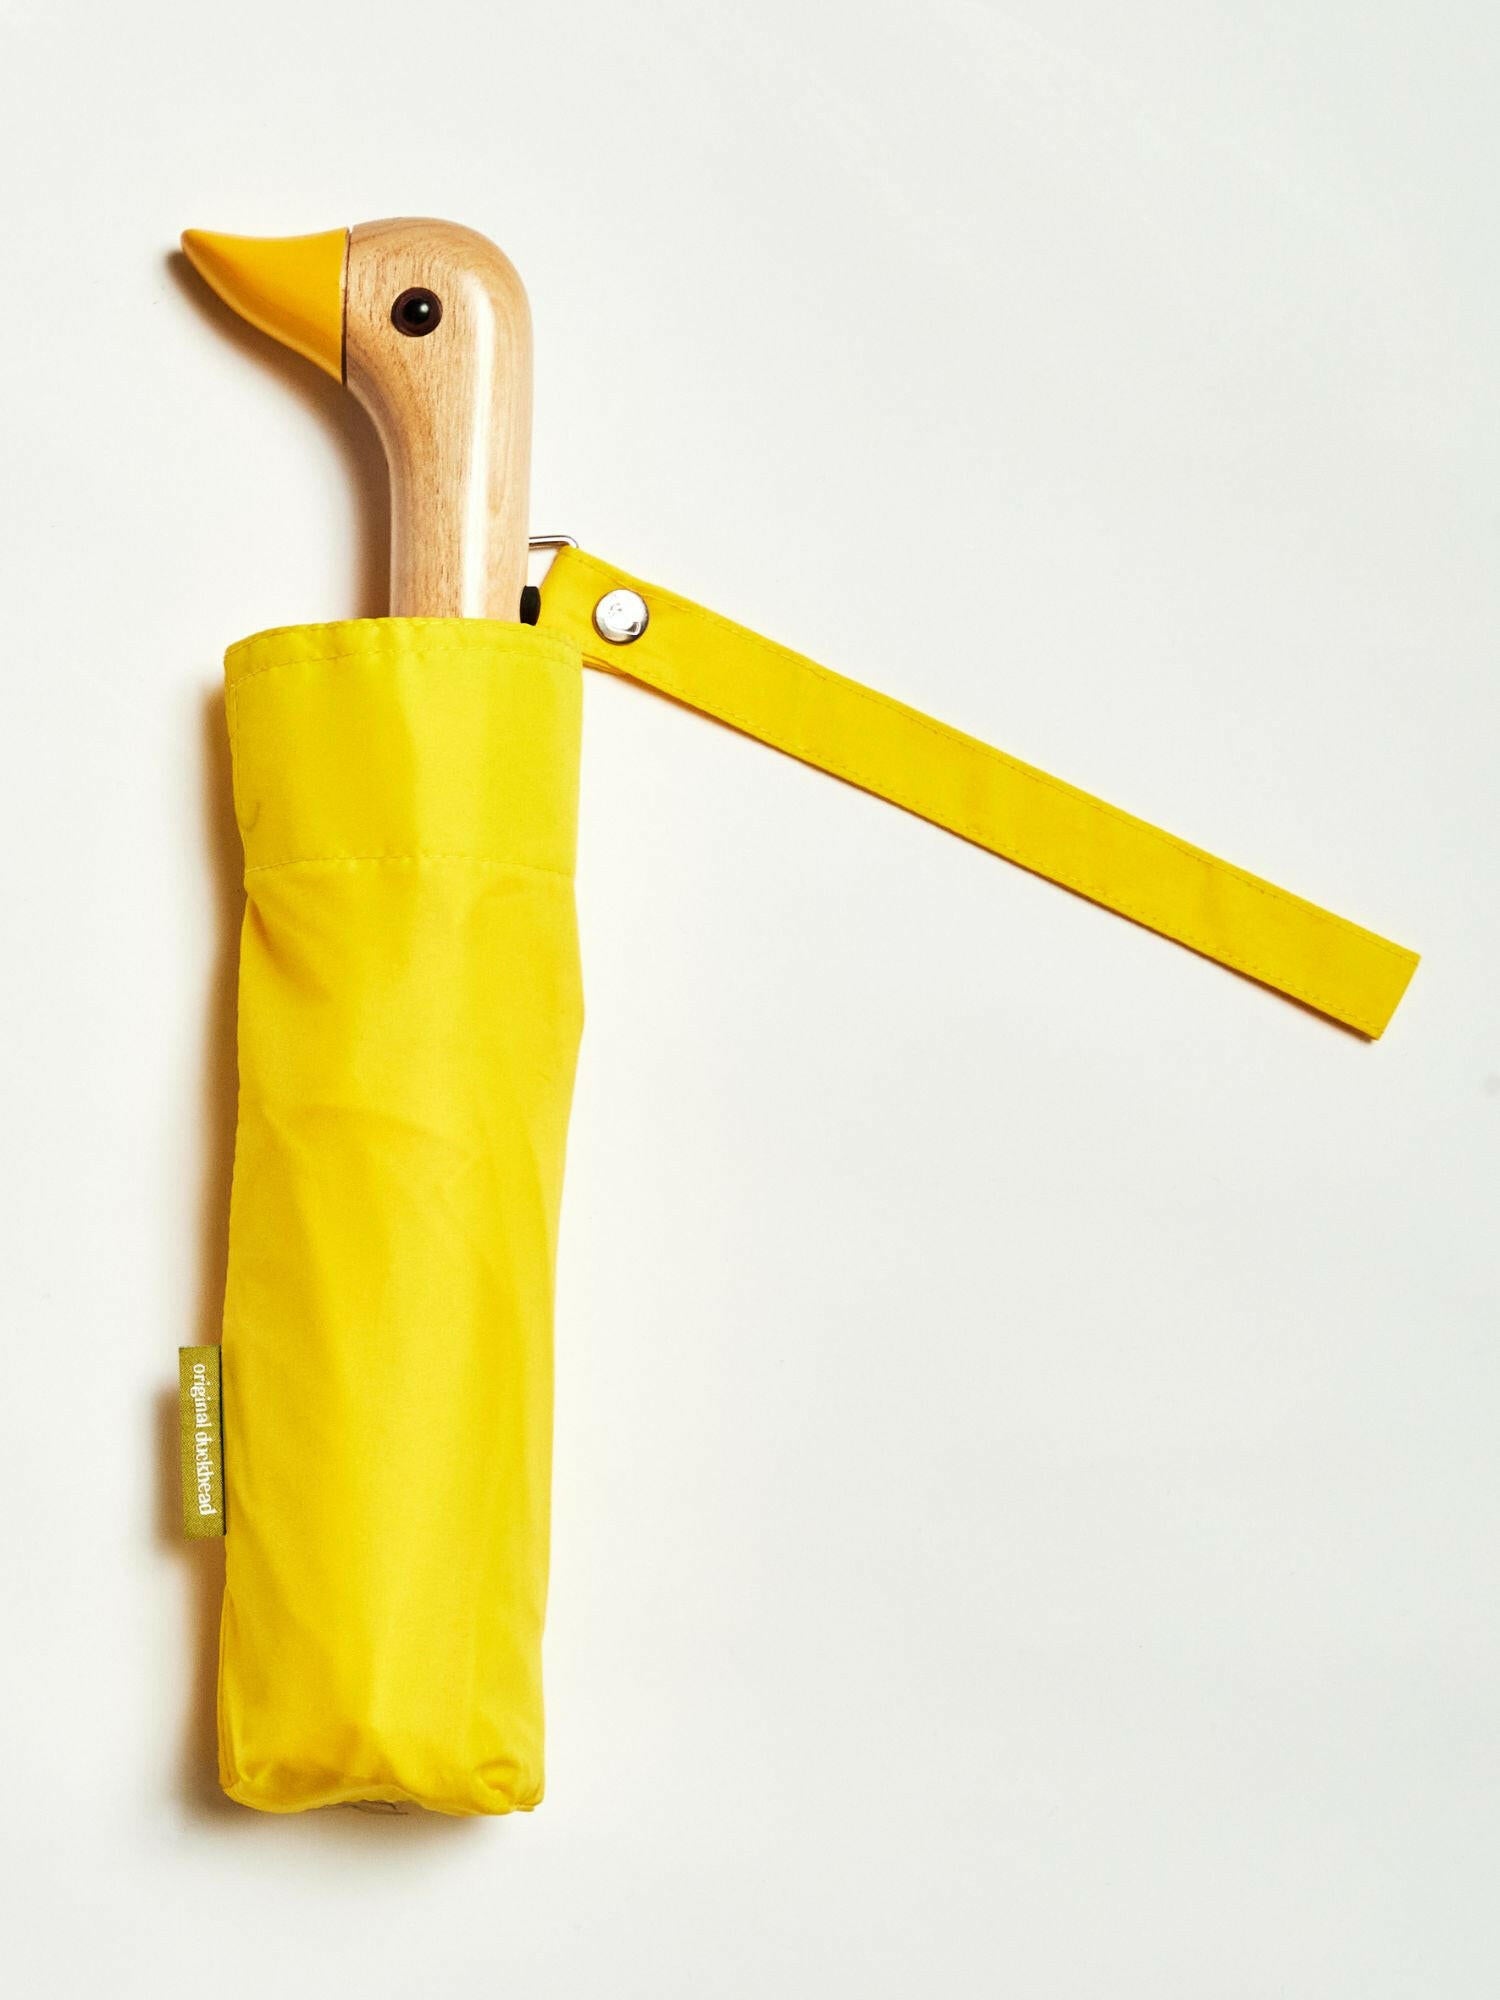 Yellow Duck Compact Umbrella.